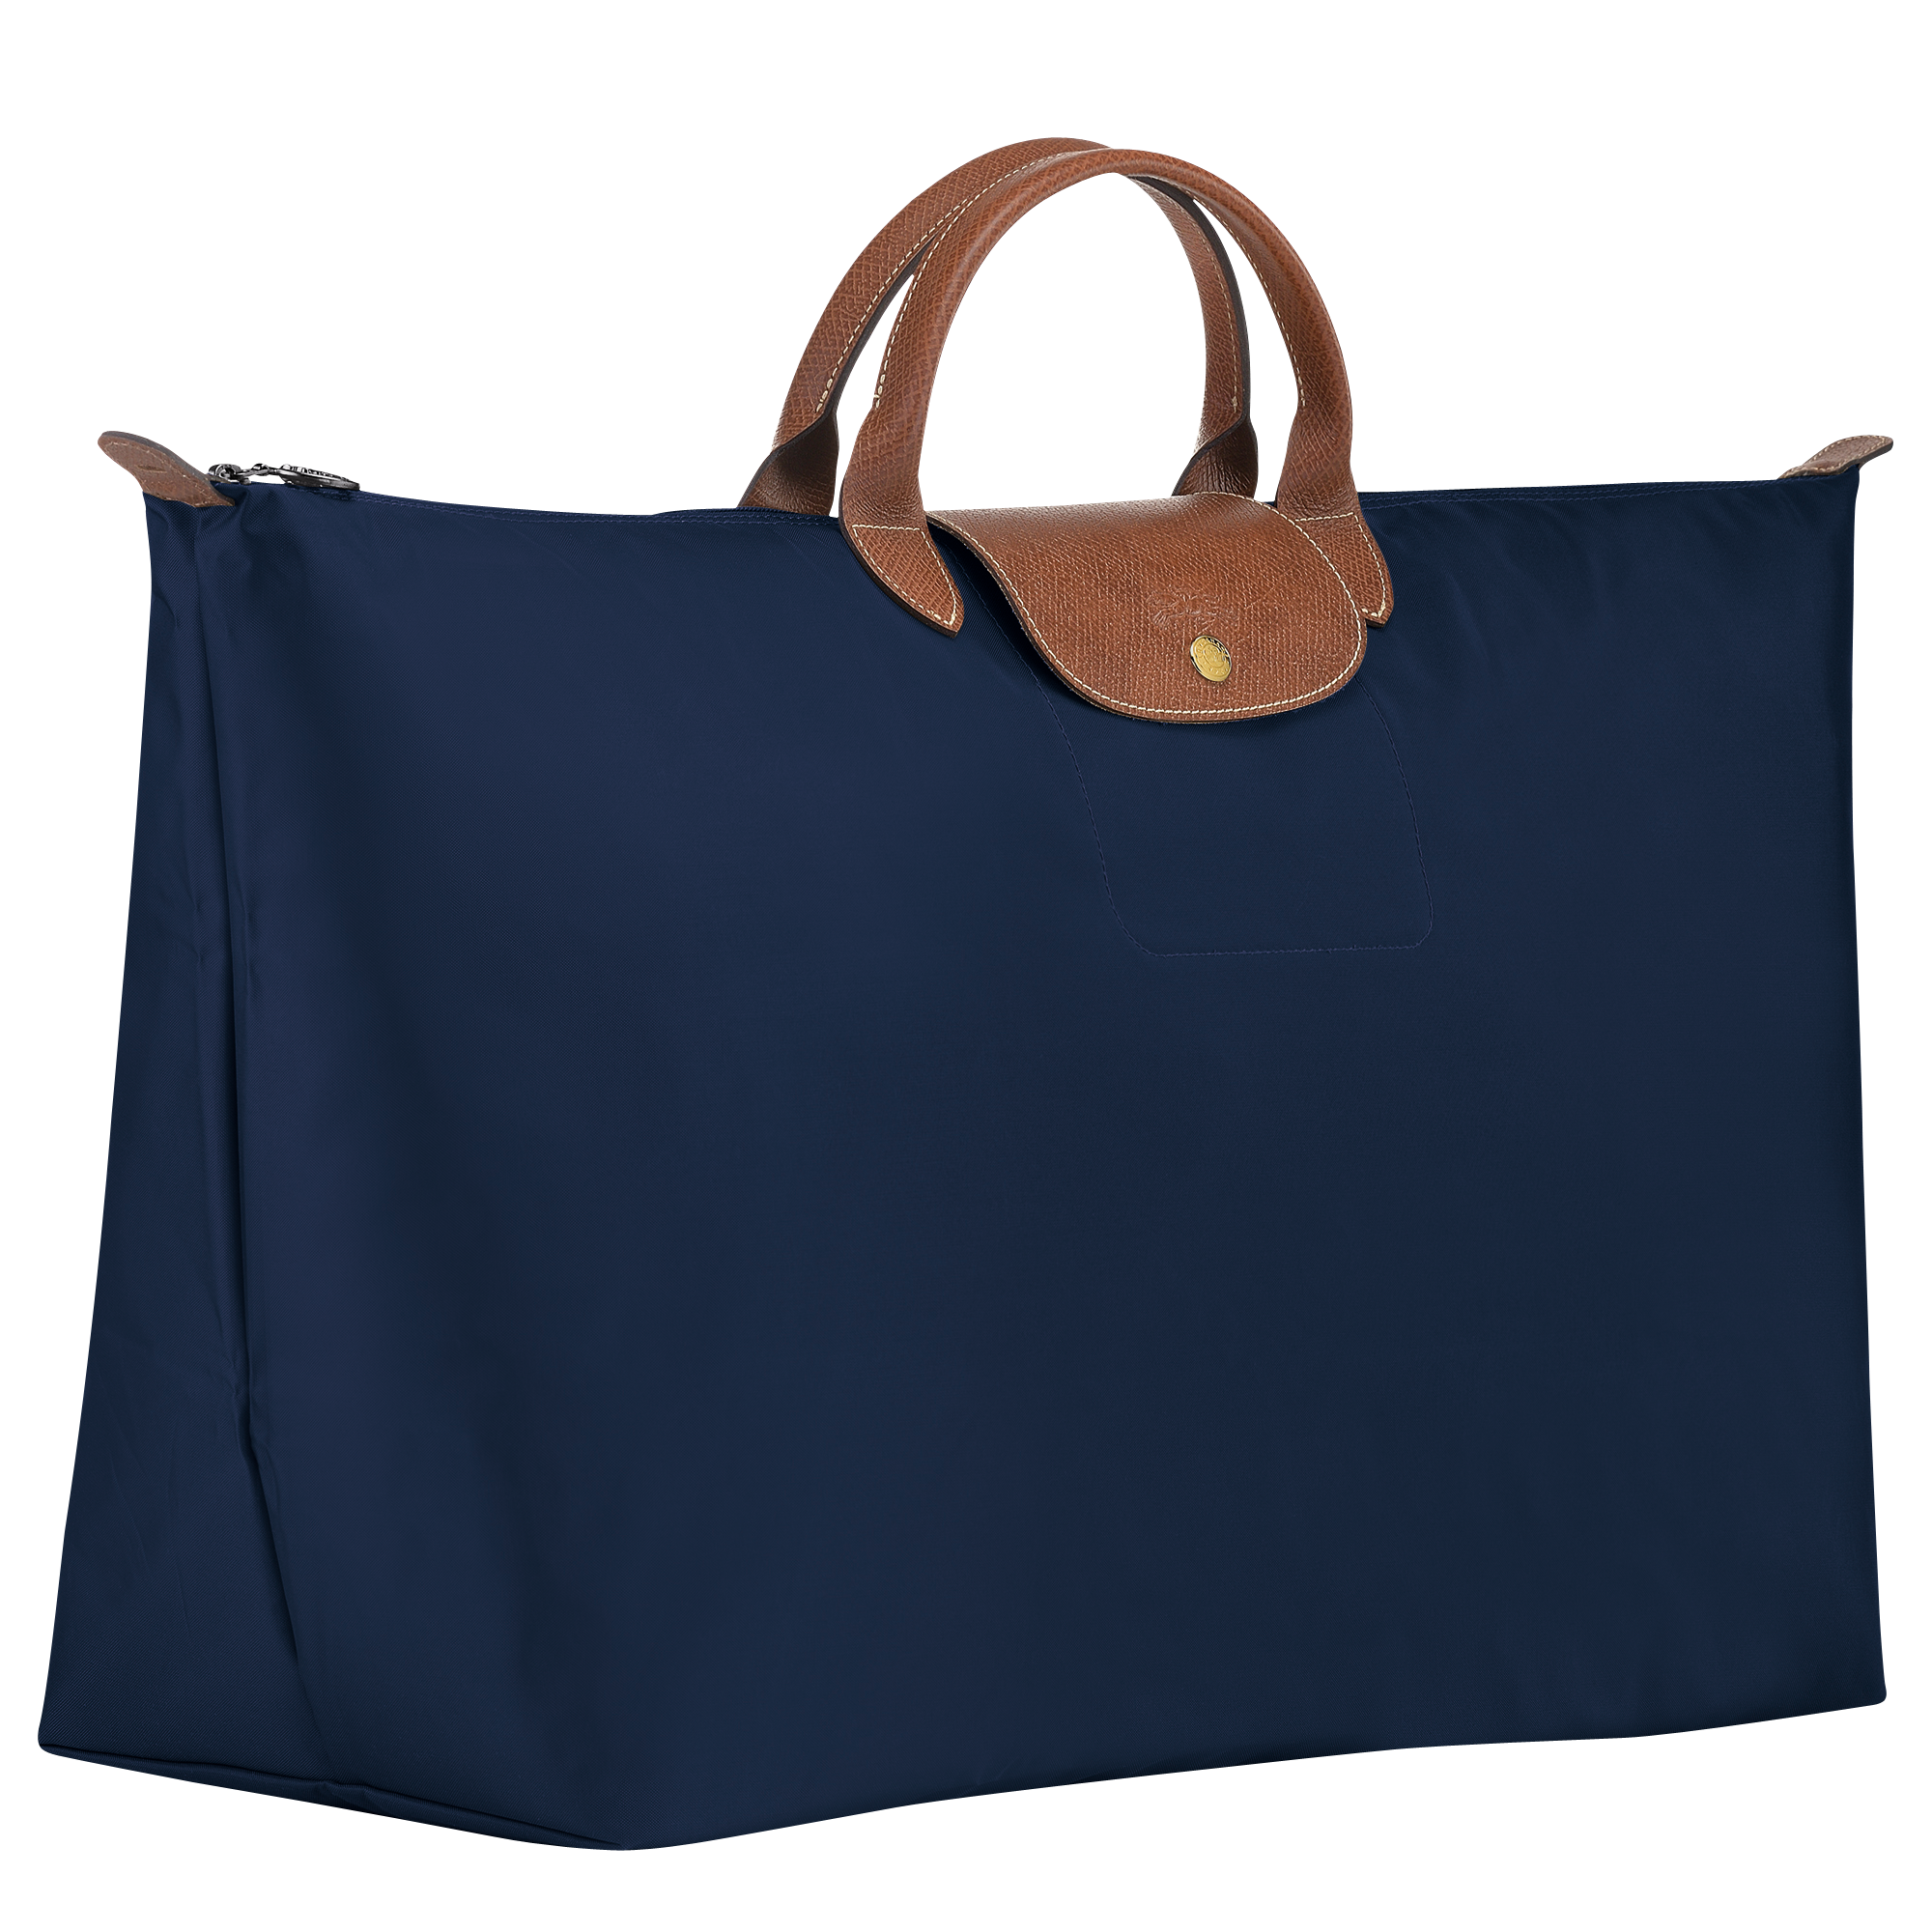 Travel bag XL Le Pliage Navy 